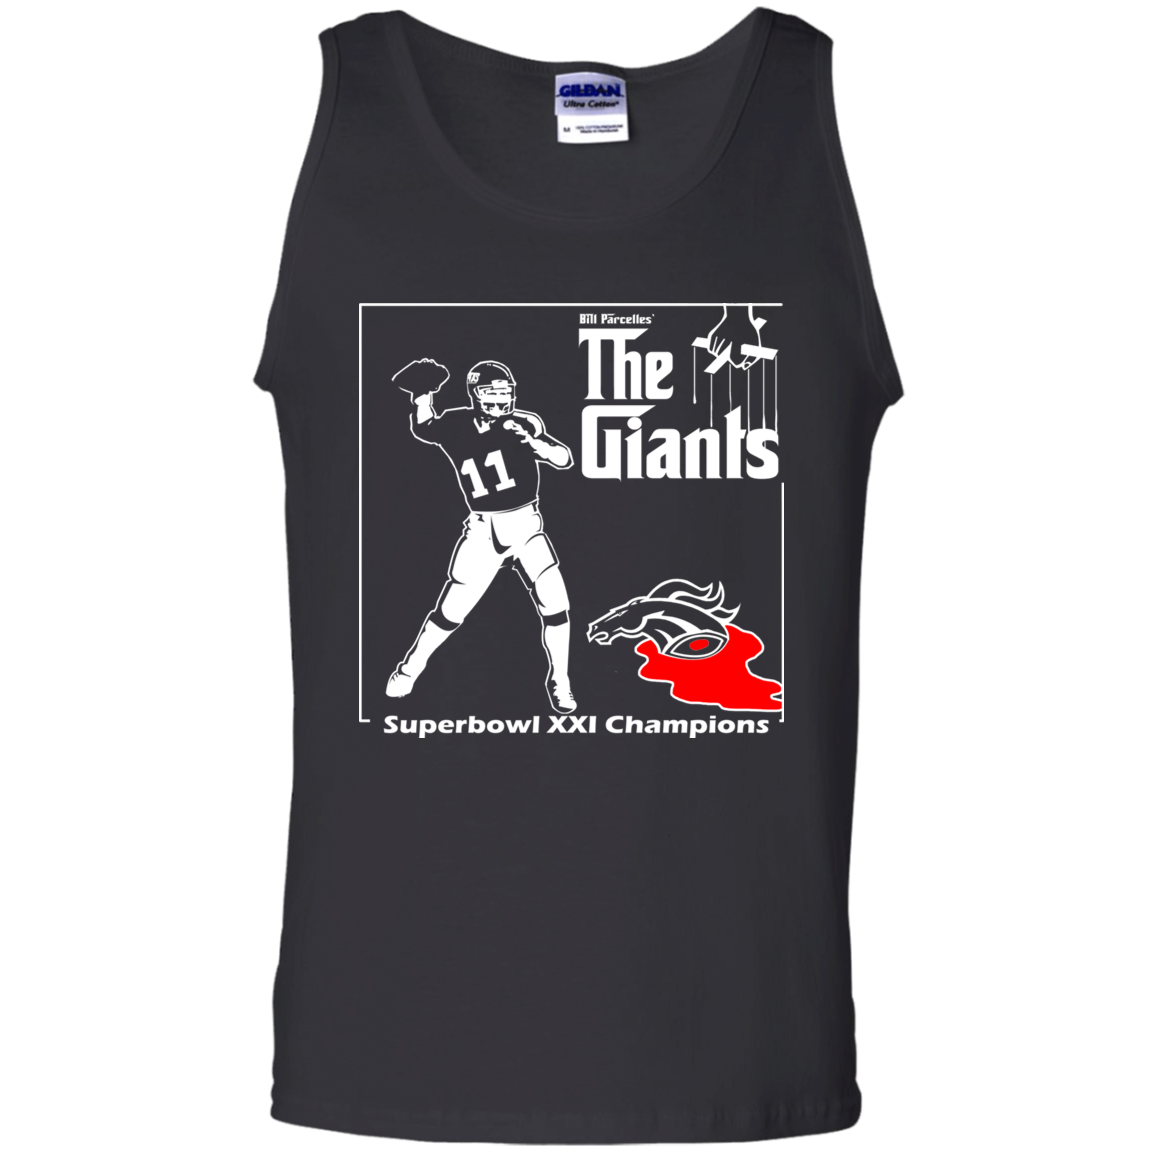 ArtichokeUSA Custom Design. Godfather Simms. NY Giants Superbowl XXI Champions. Men's 100% Cotton Tank Top